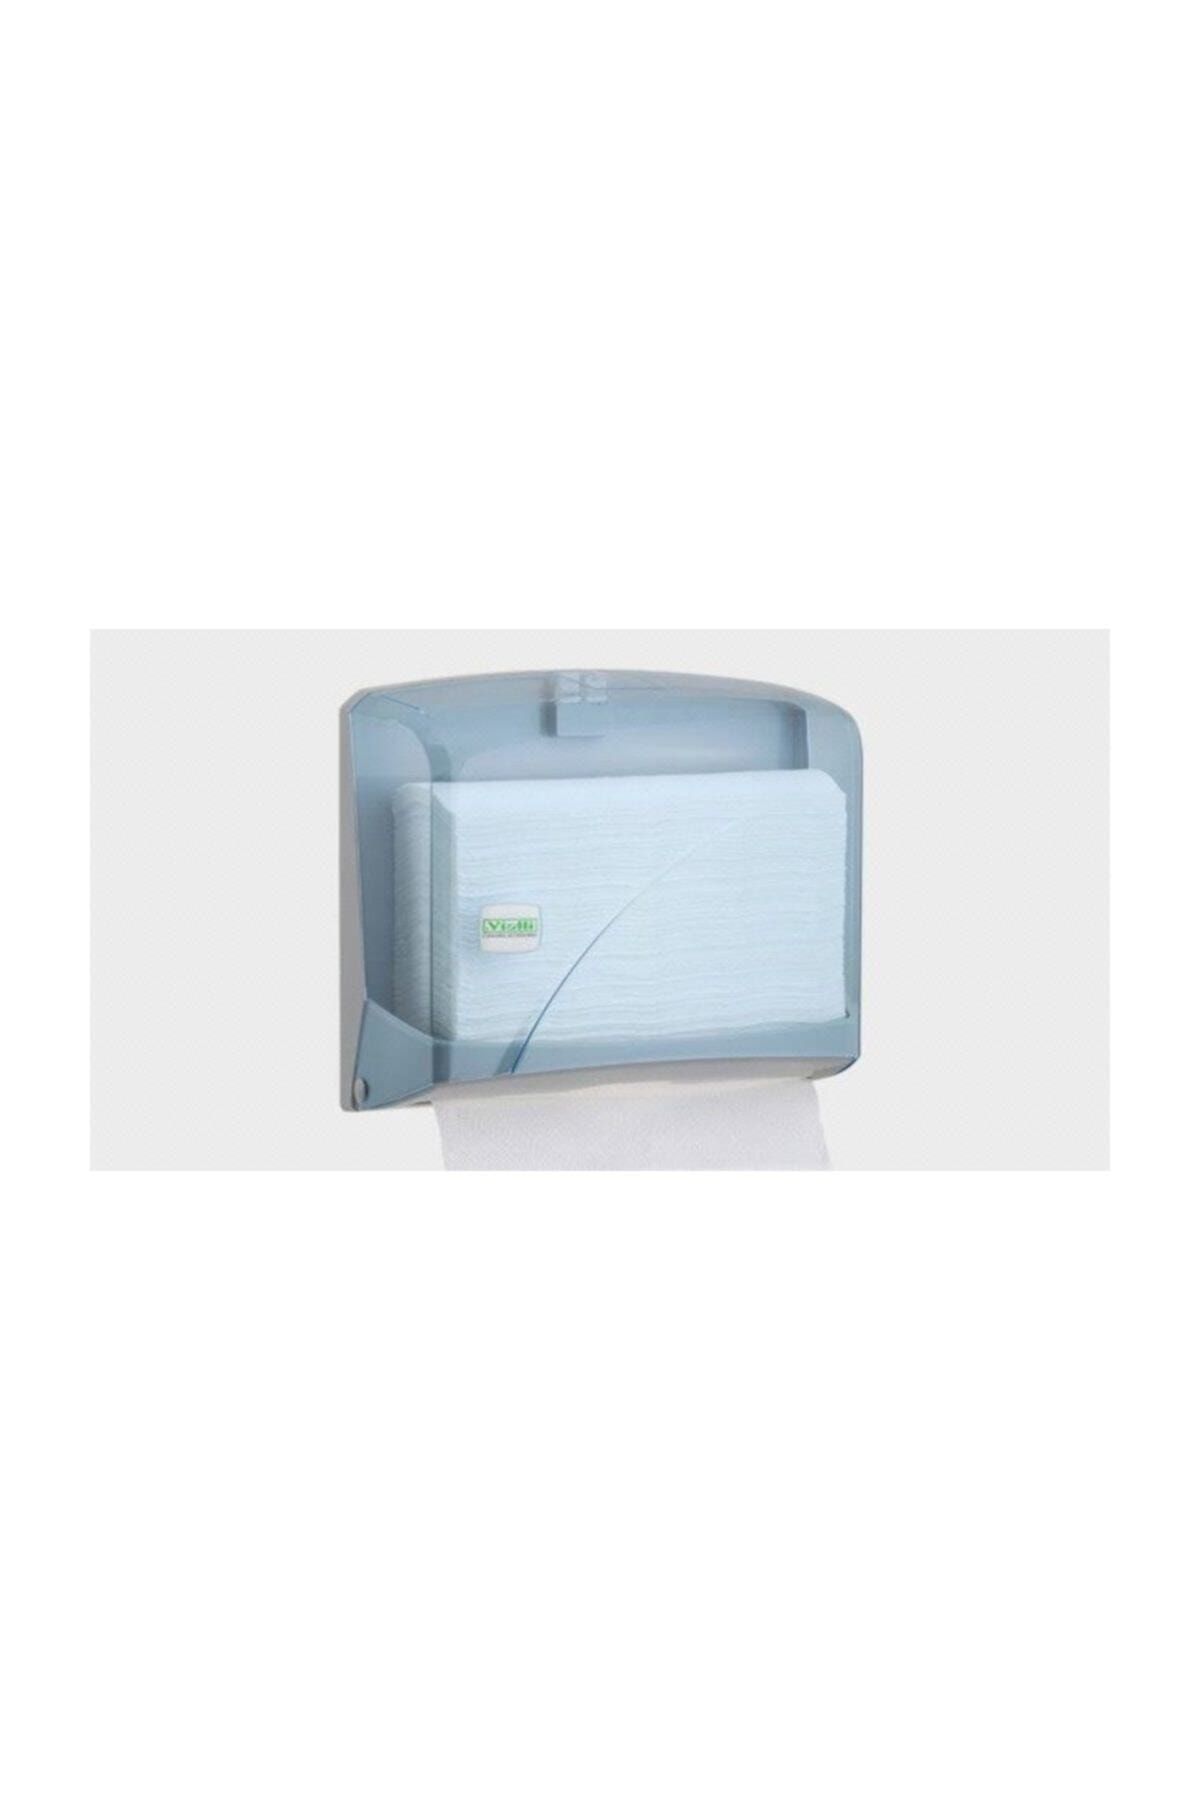 Vialli K1t Z Katlı Kağıt Havlu Dispenseri  Şeffaf-kapasite 200 Kağıt